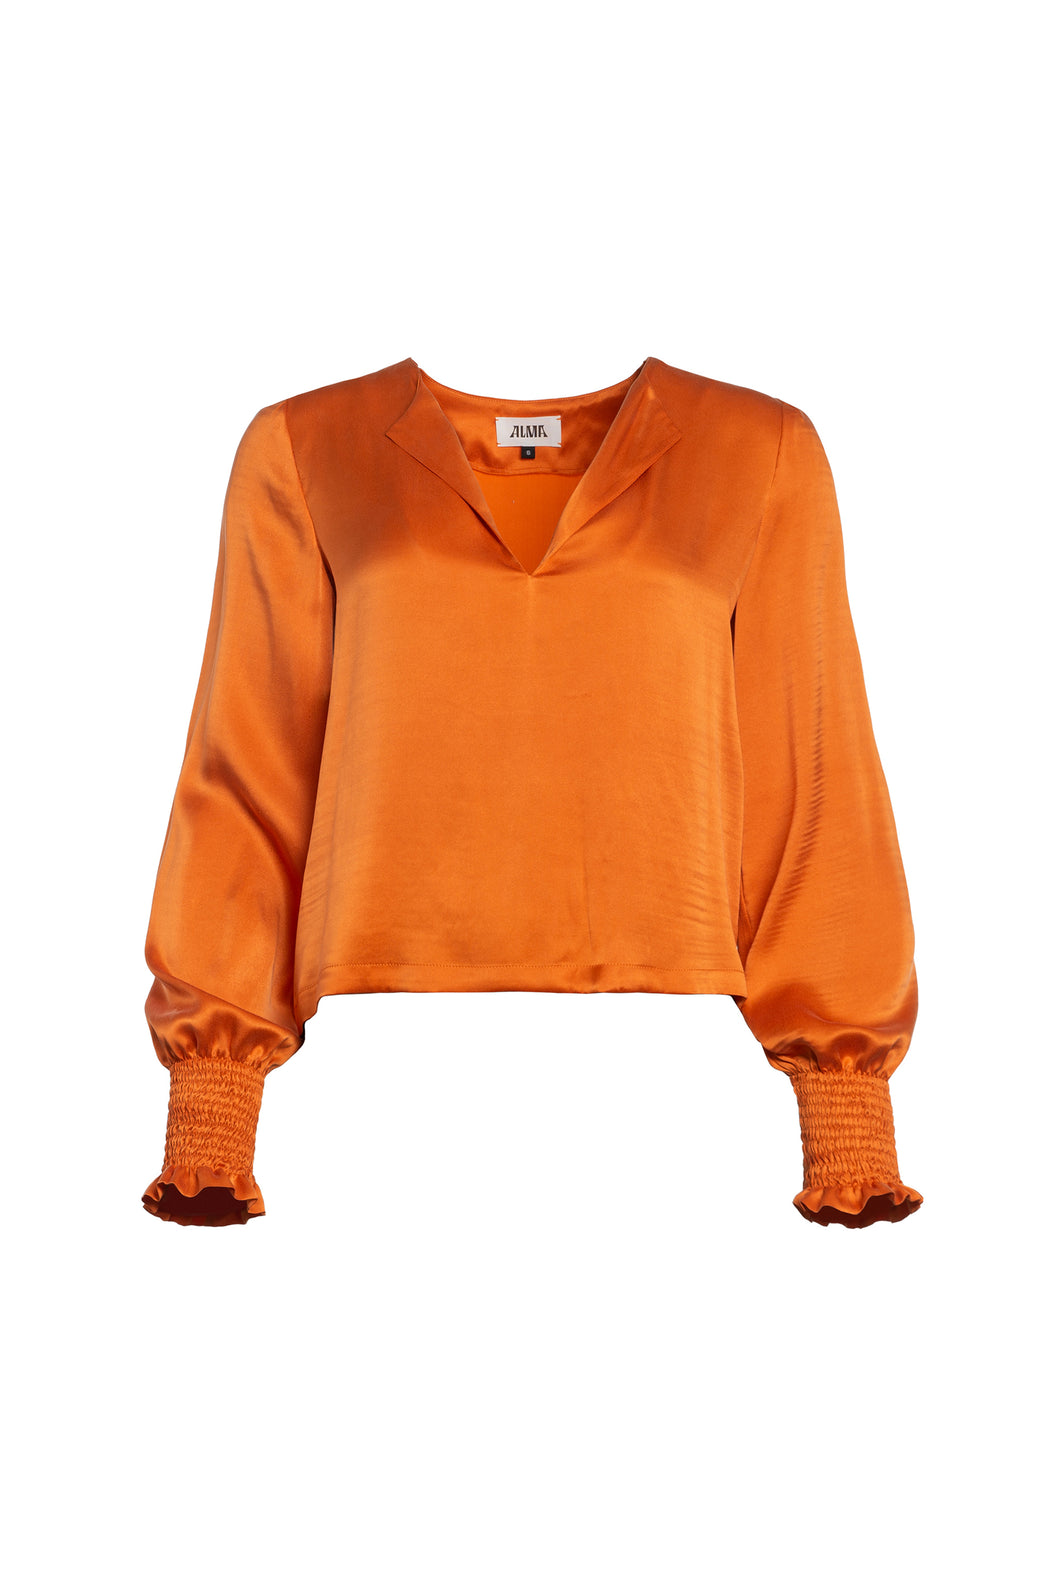 Giggle silk blouse / orange